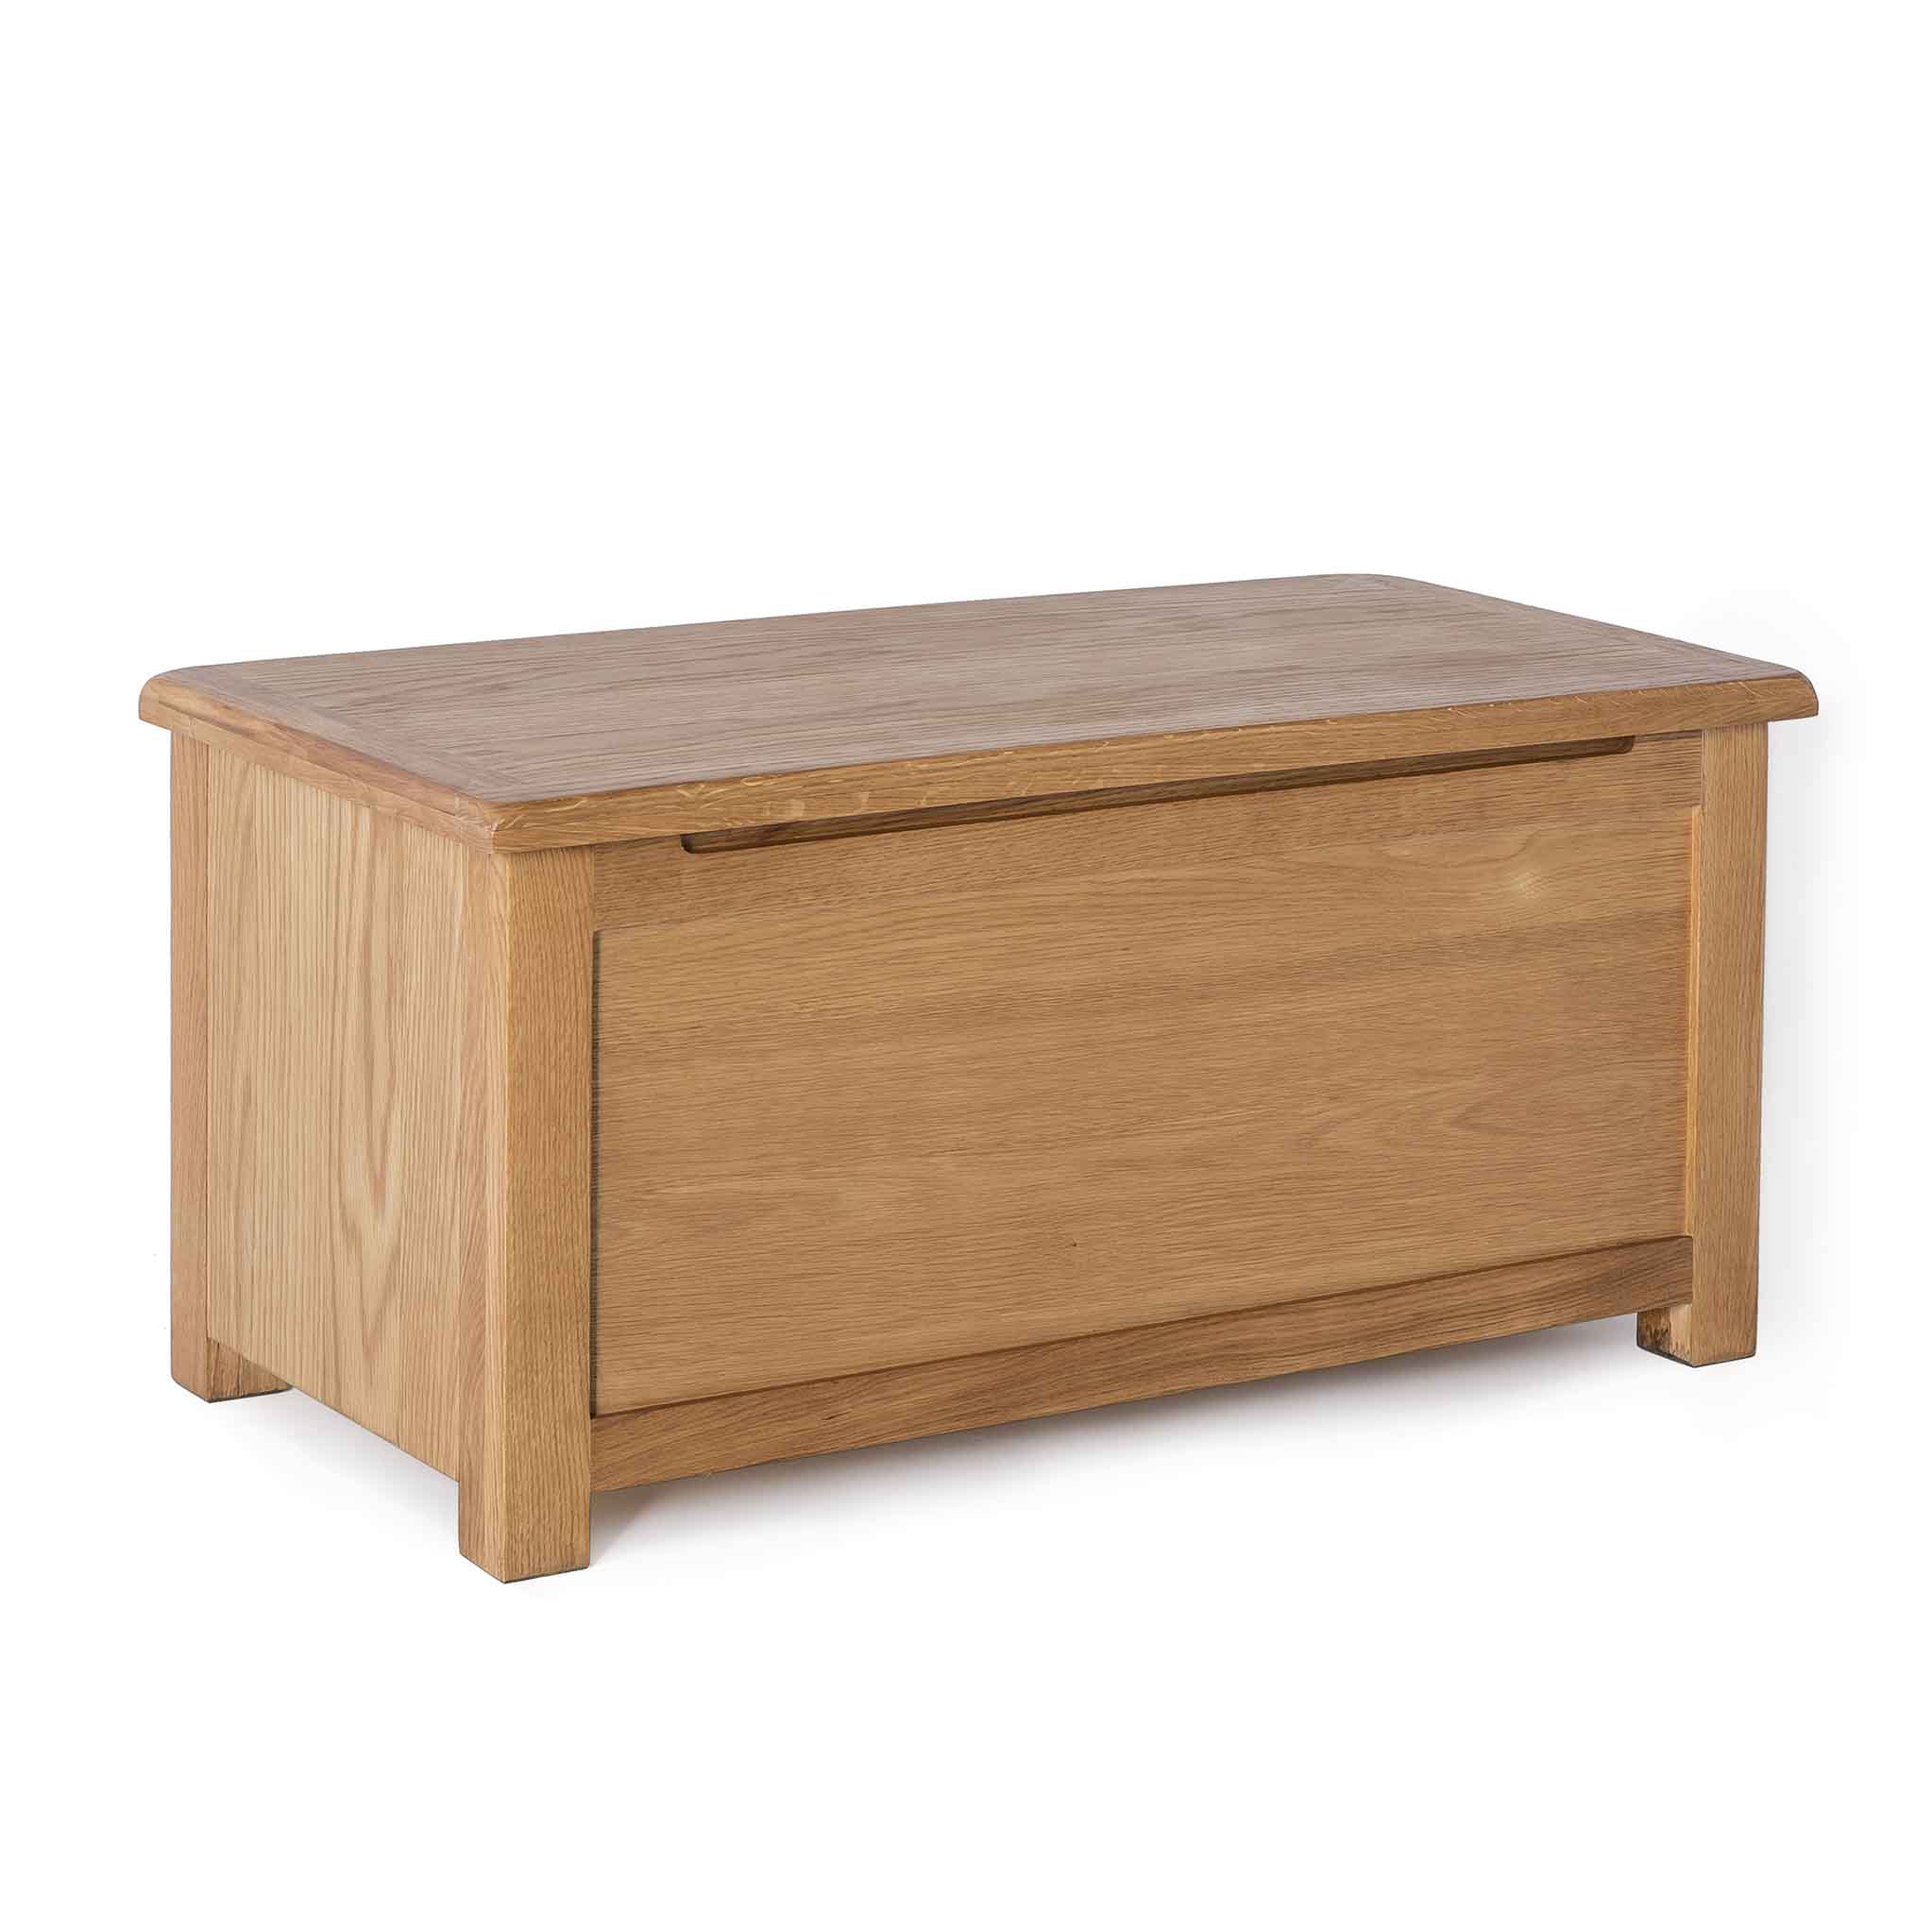 Surrey Oak Blanket Box With Sprung Top Solid Wood Rustic Waxed Oak